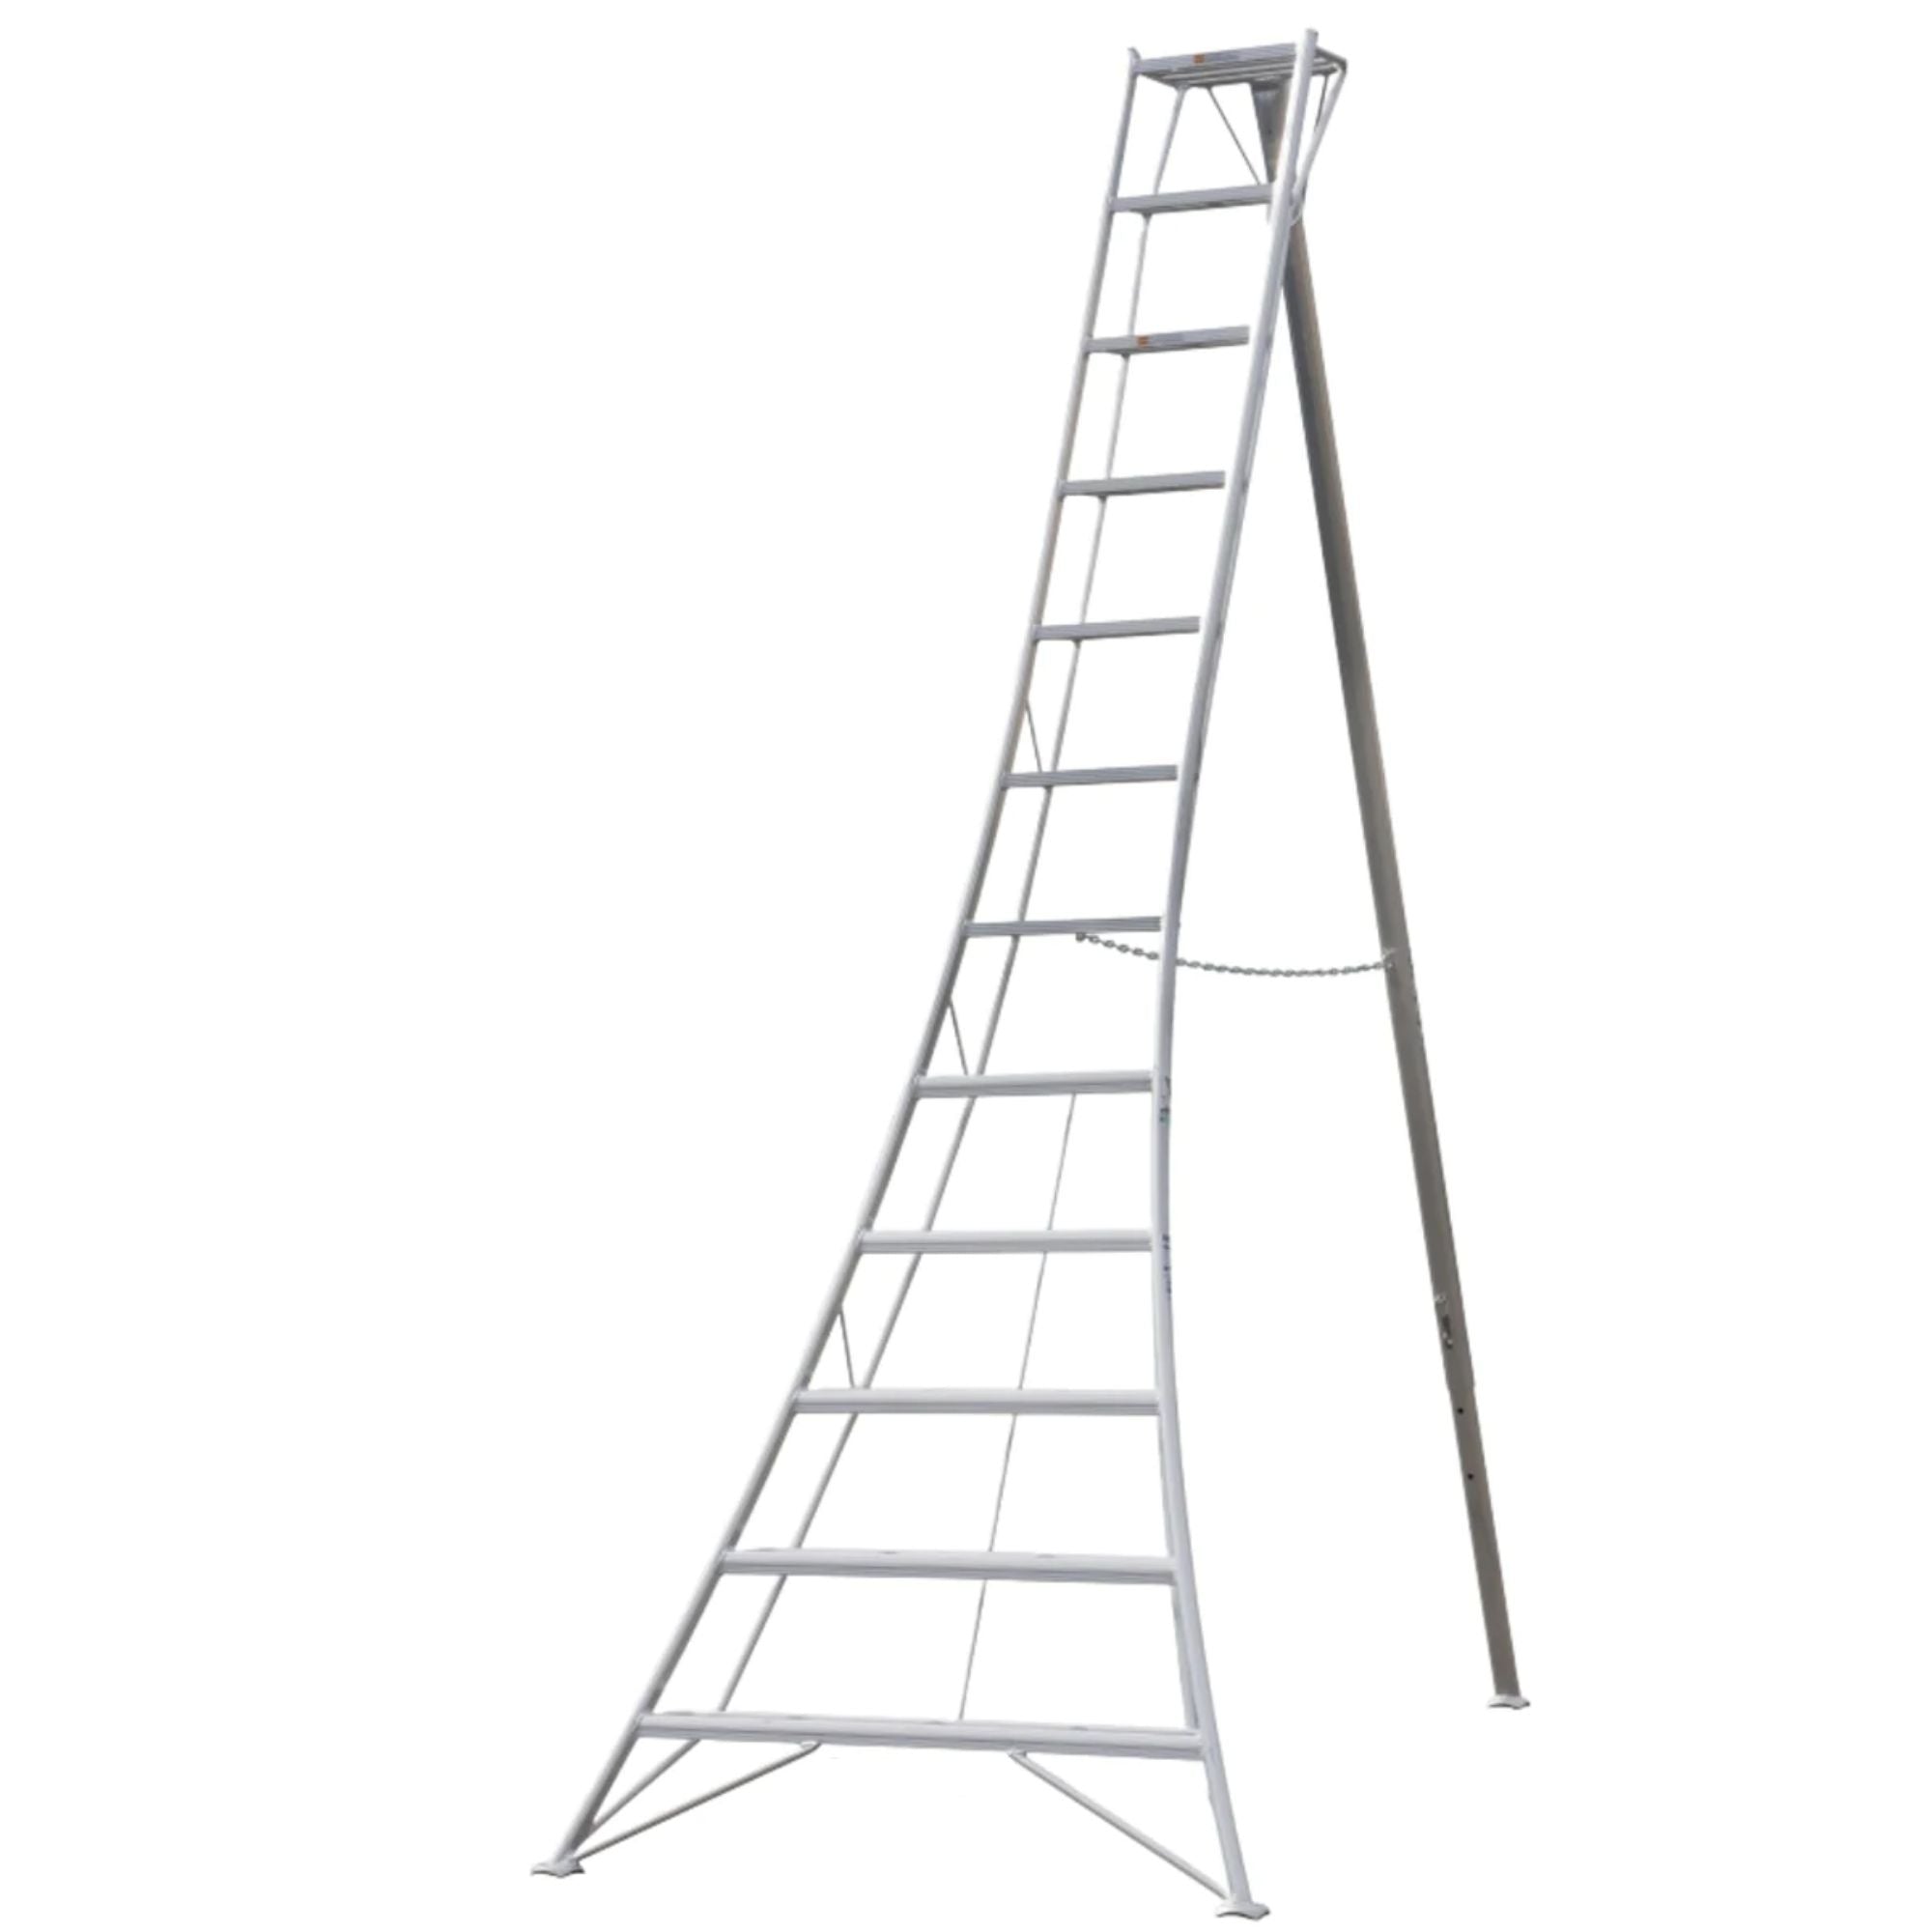 GSC-16AS 16' Tripod Ladder ANSI 300 LB Rating